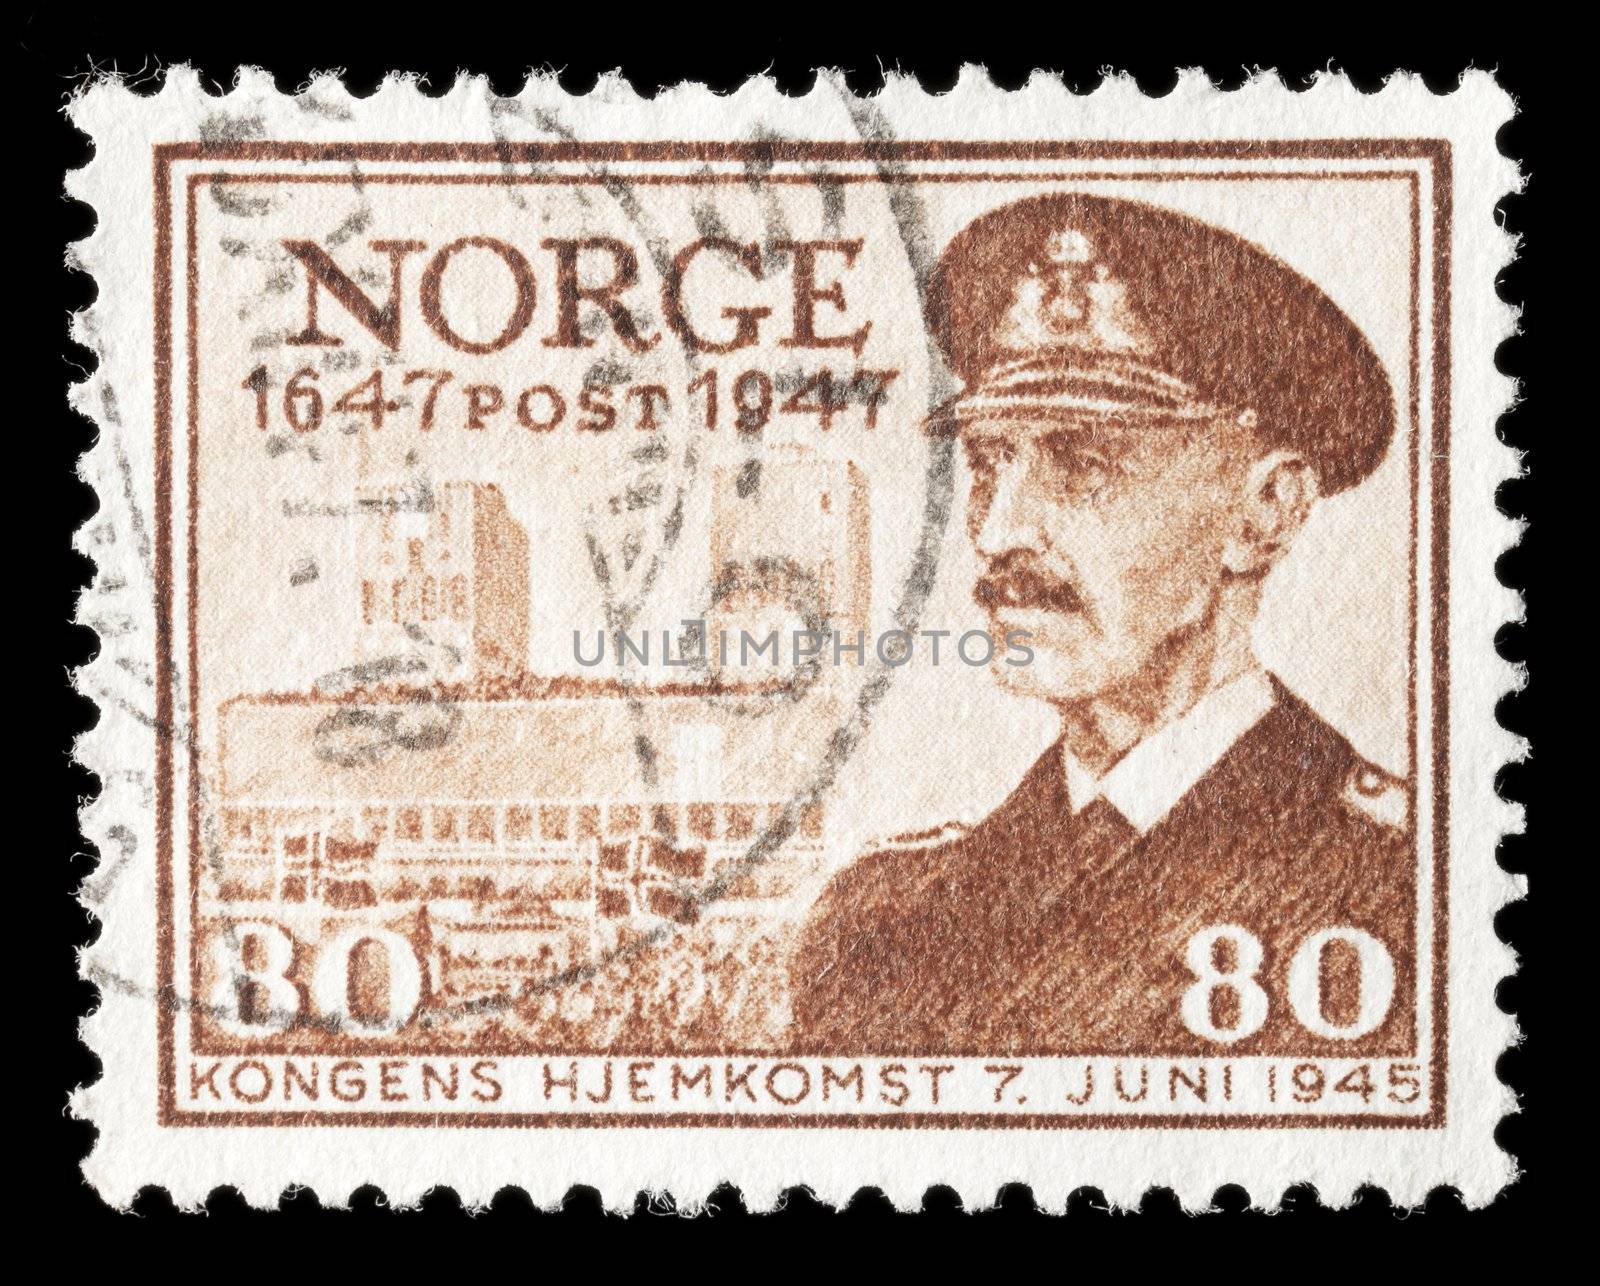 Return of king Haakon VI by Stocksnapper